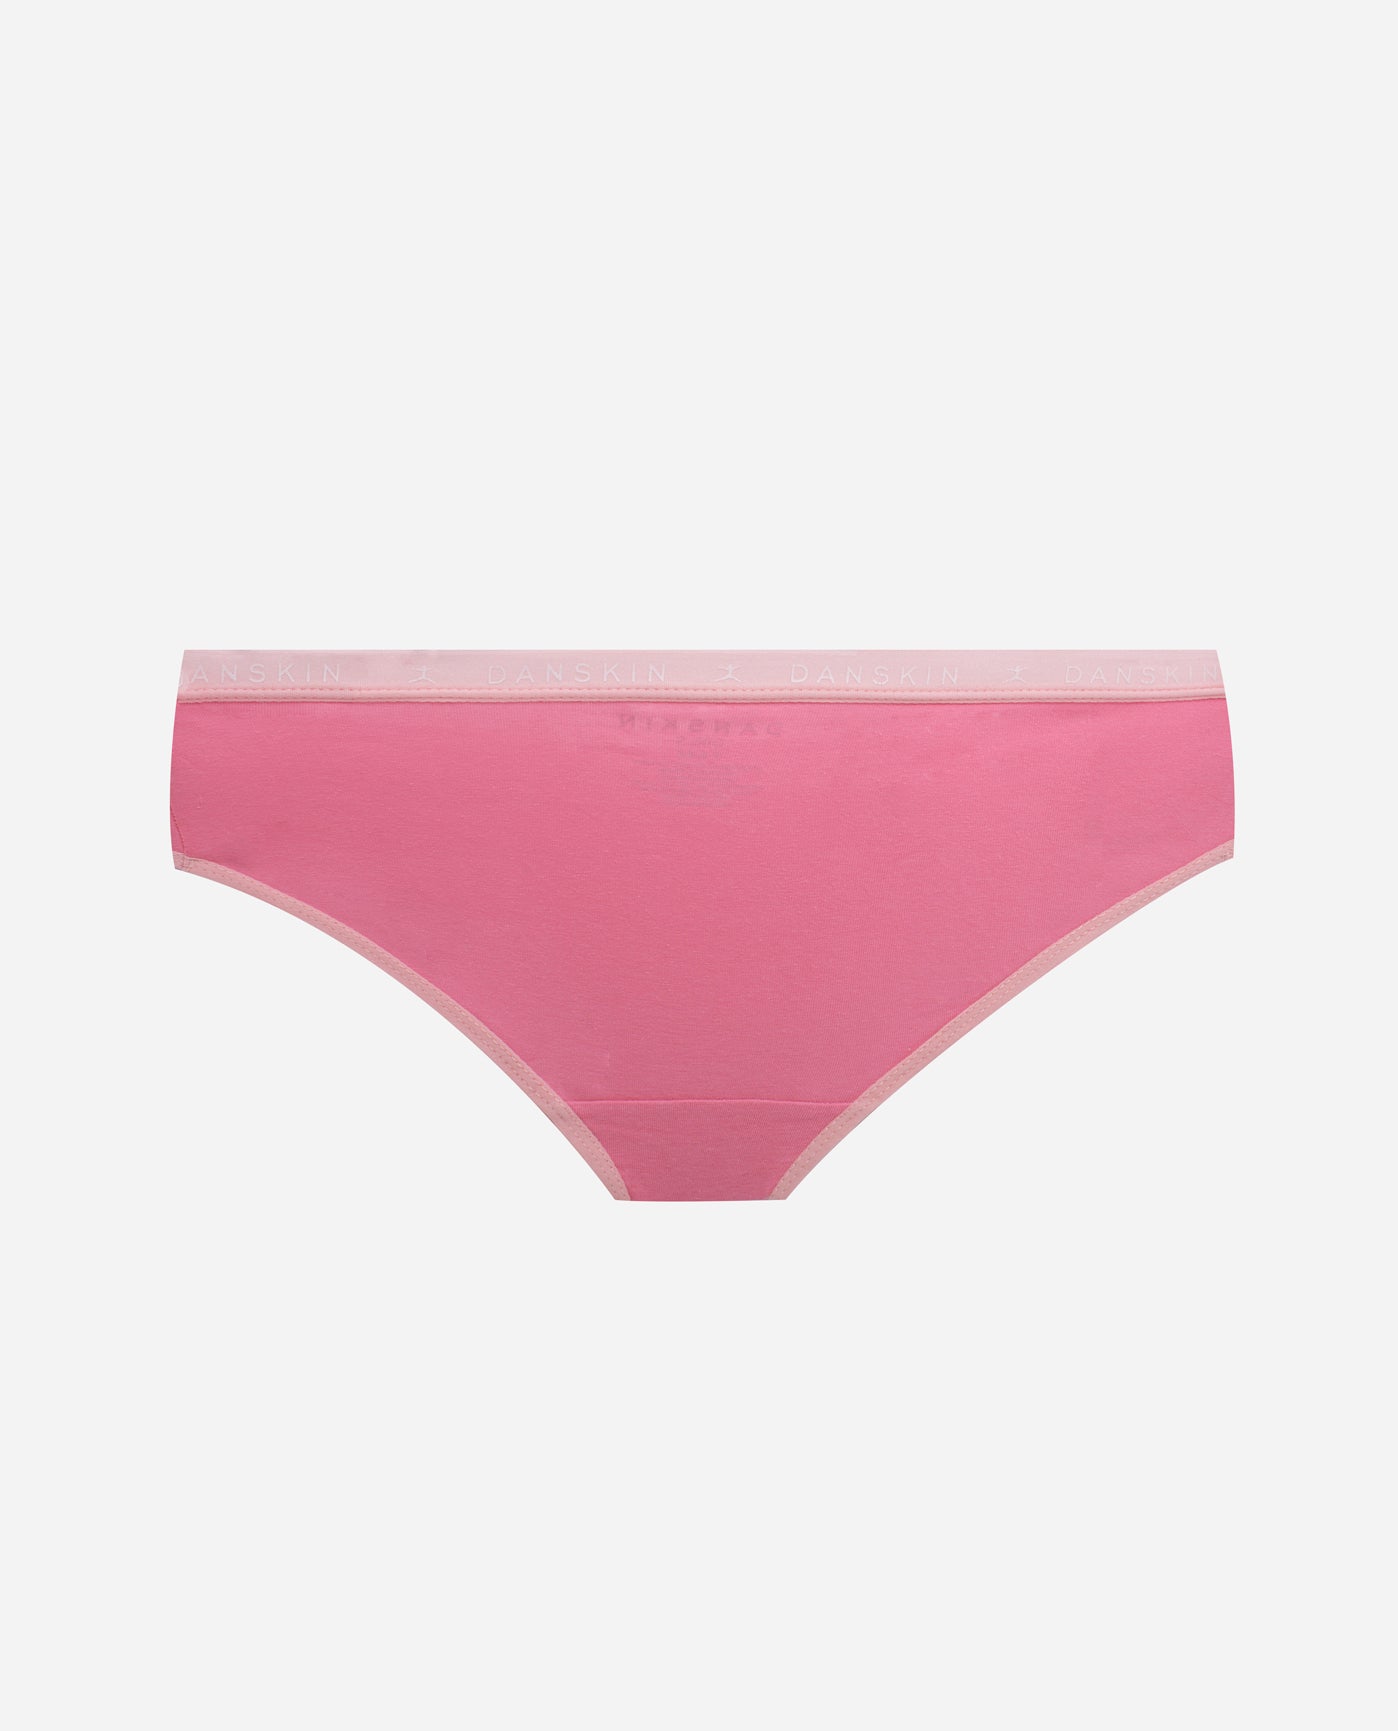 DANSKIN Girls Perfect Fit Everyday Comfort Panties Underwear Set of 3 NEW 